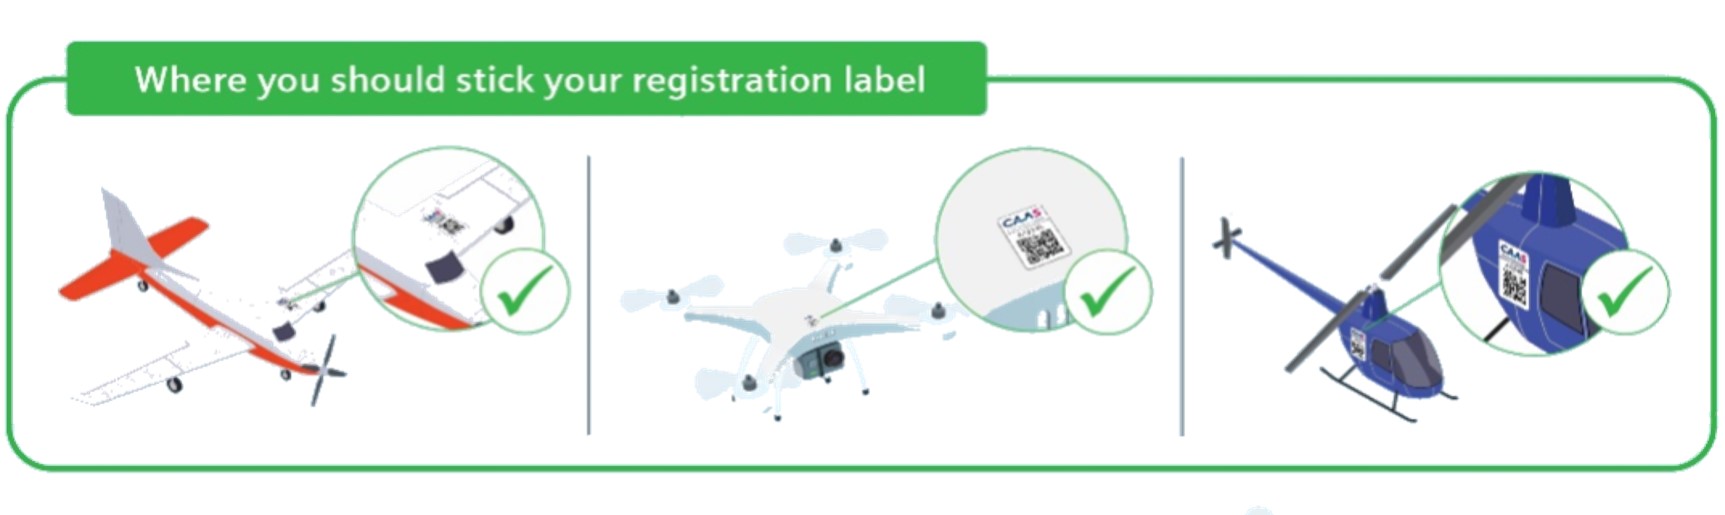 registeration_label